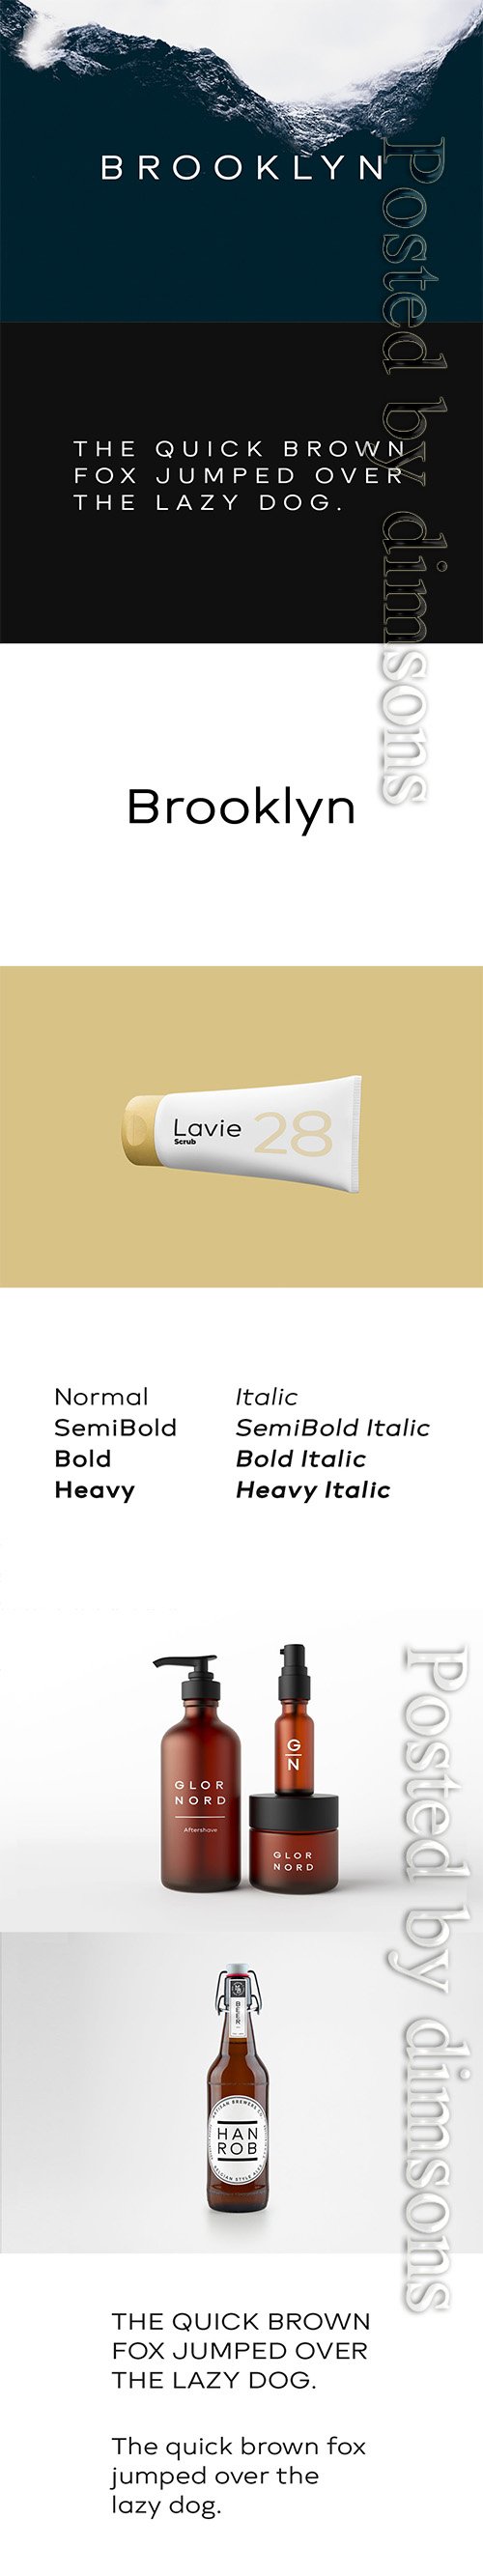 BROOKLYN - Minimal Geometric Sans-Serif Typeface